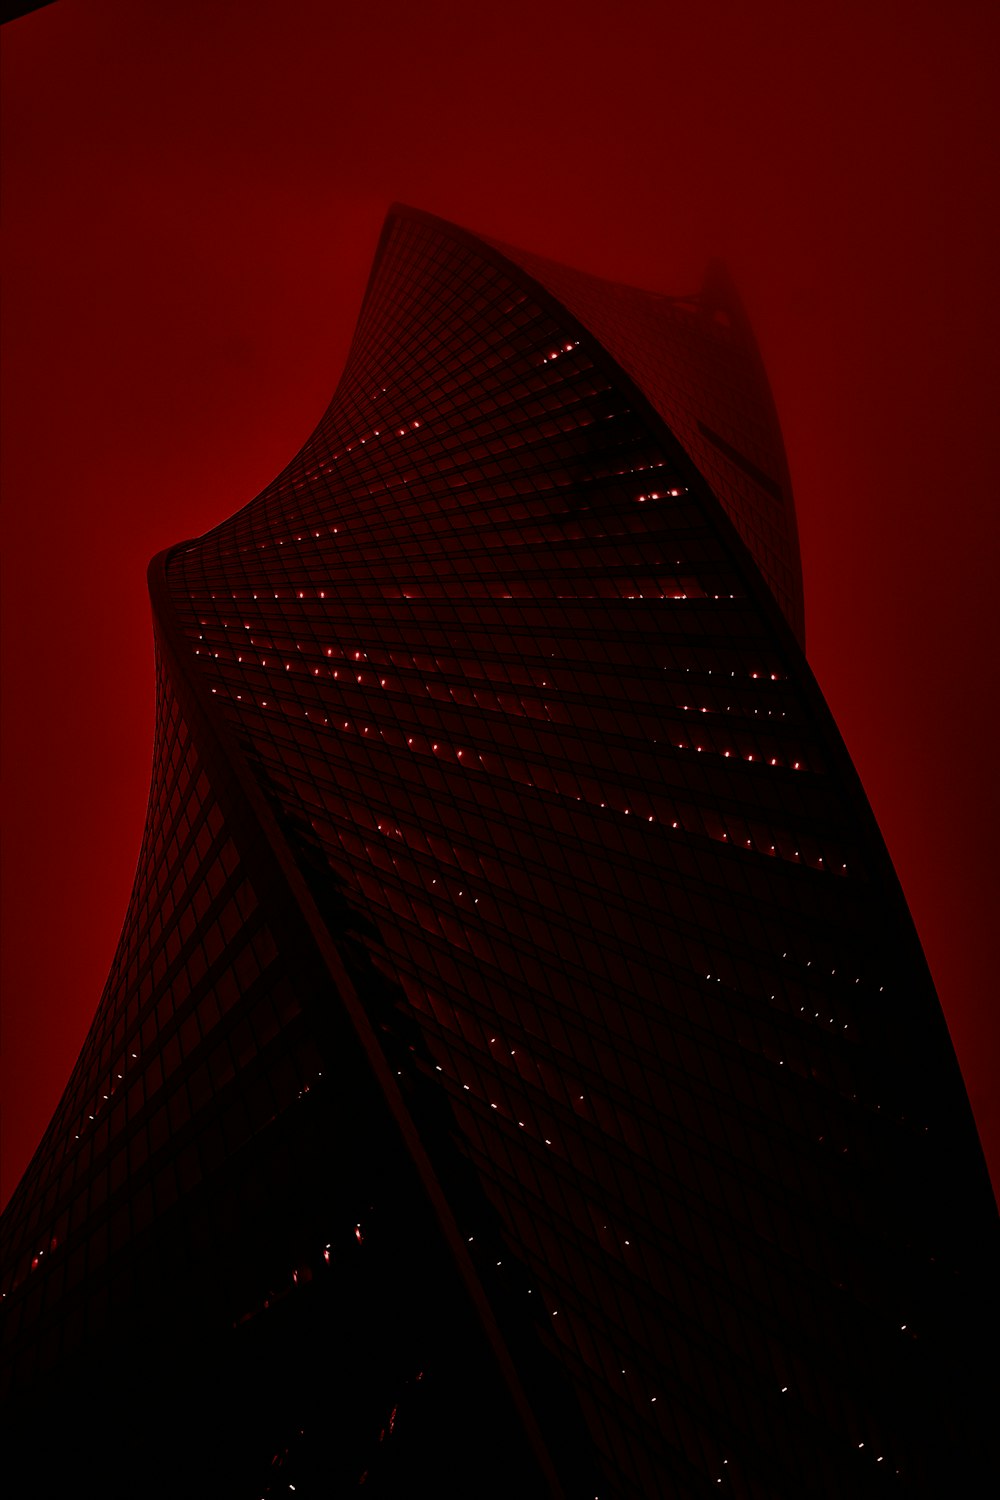 red and black umbrella illustration